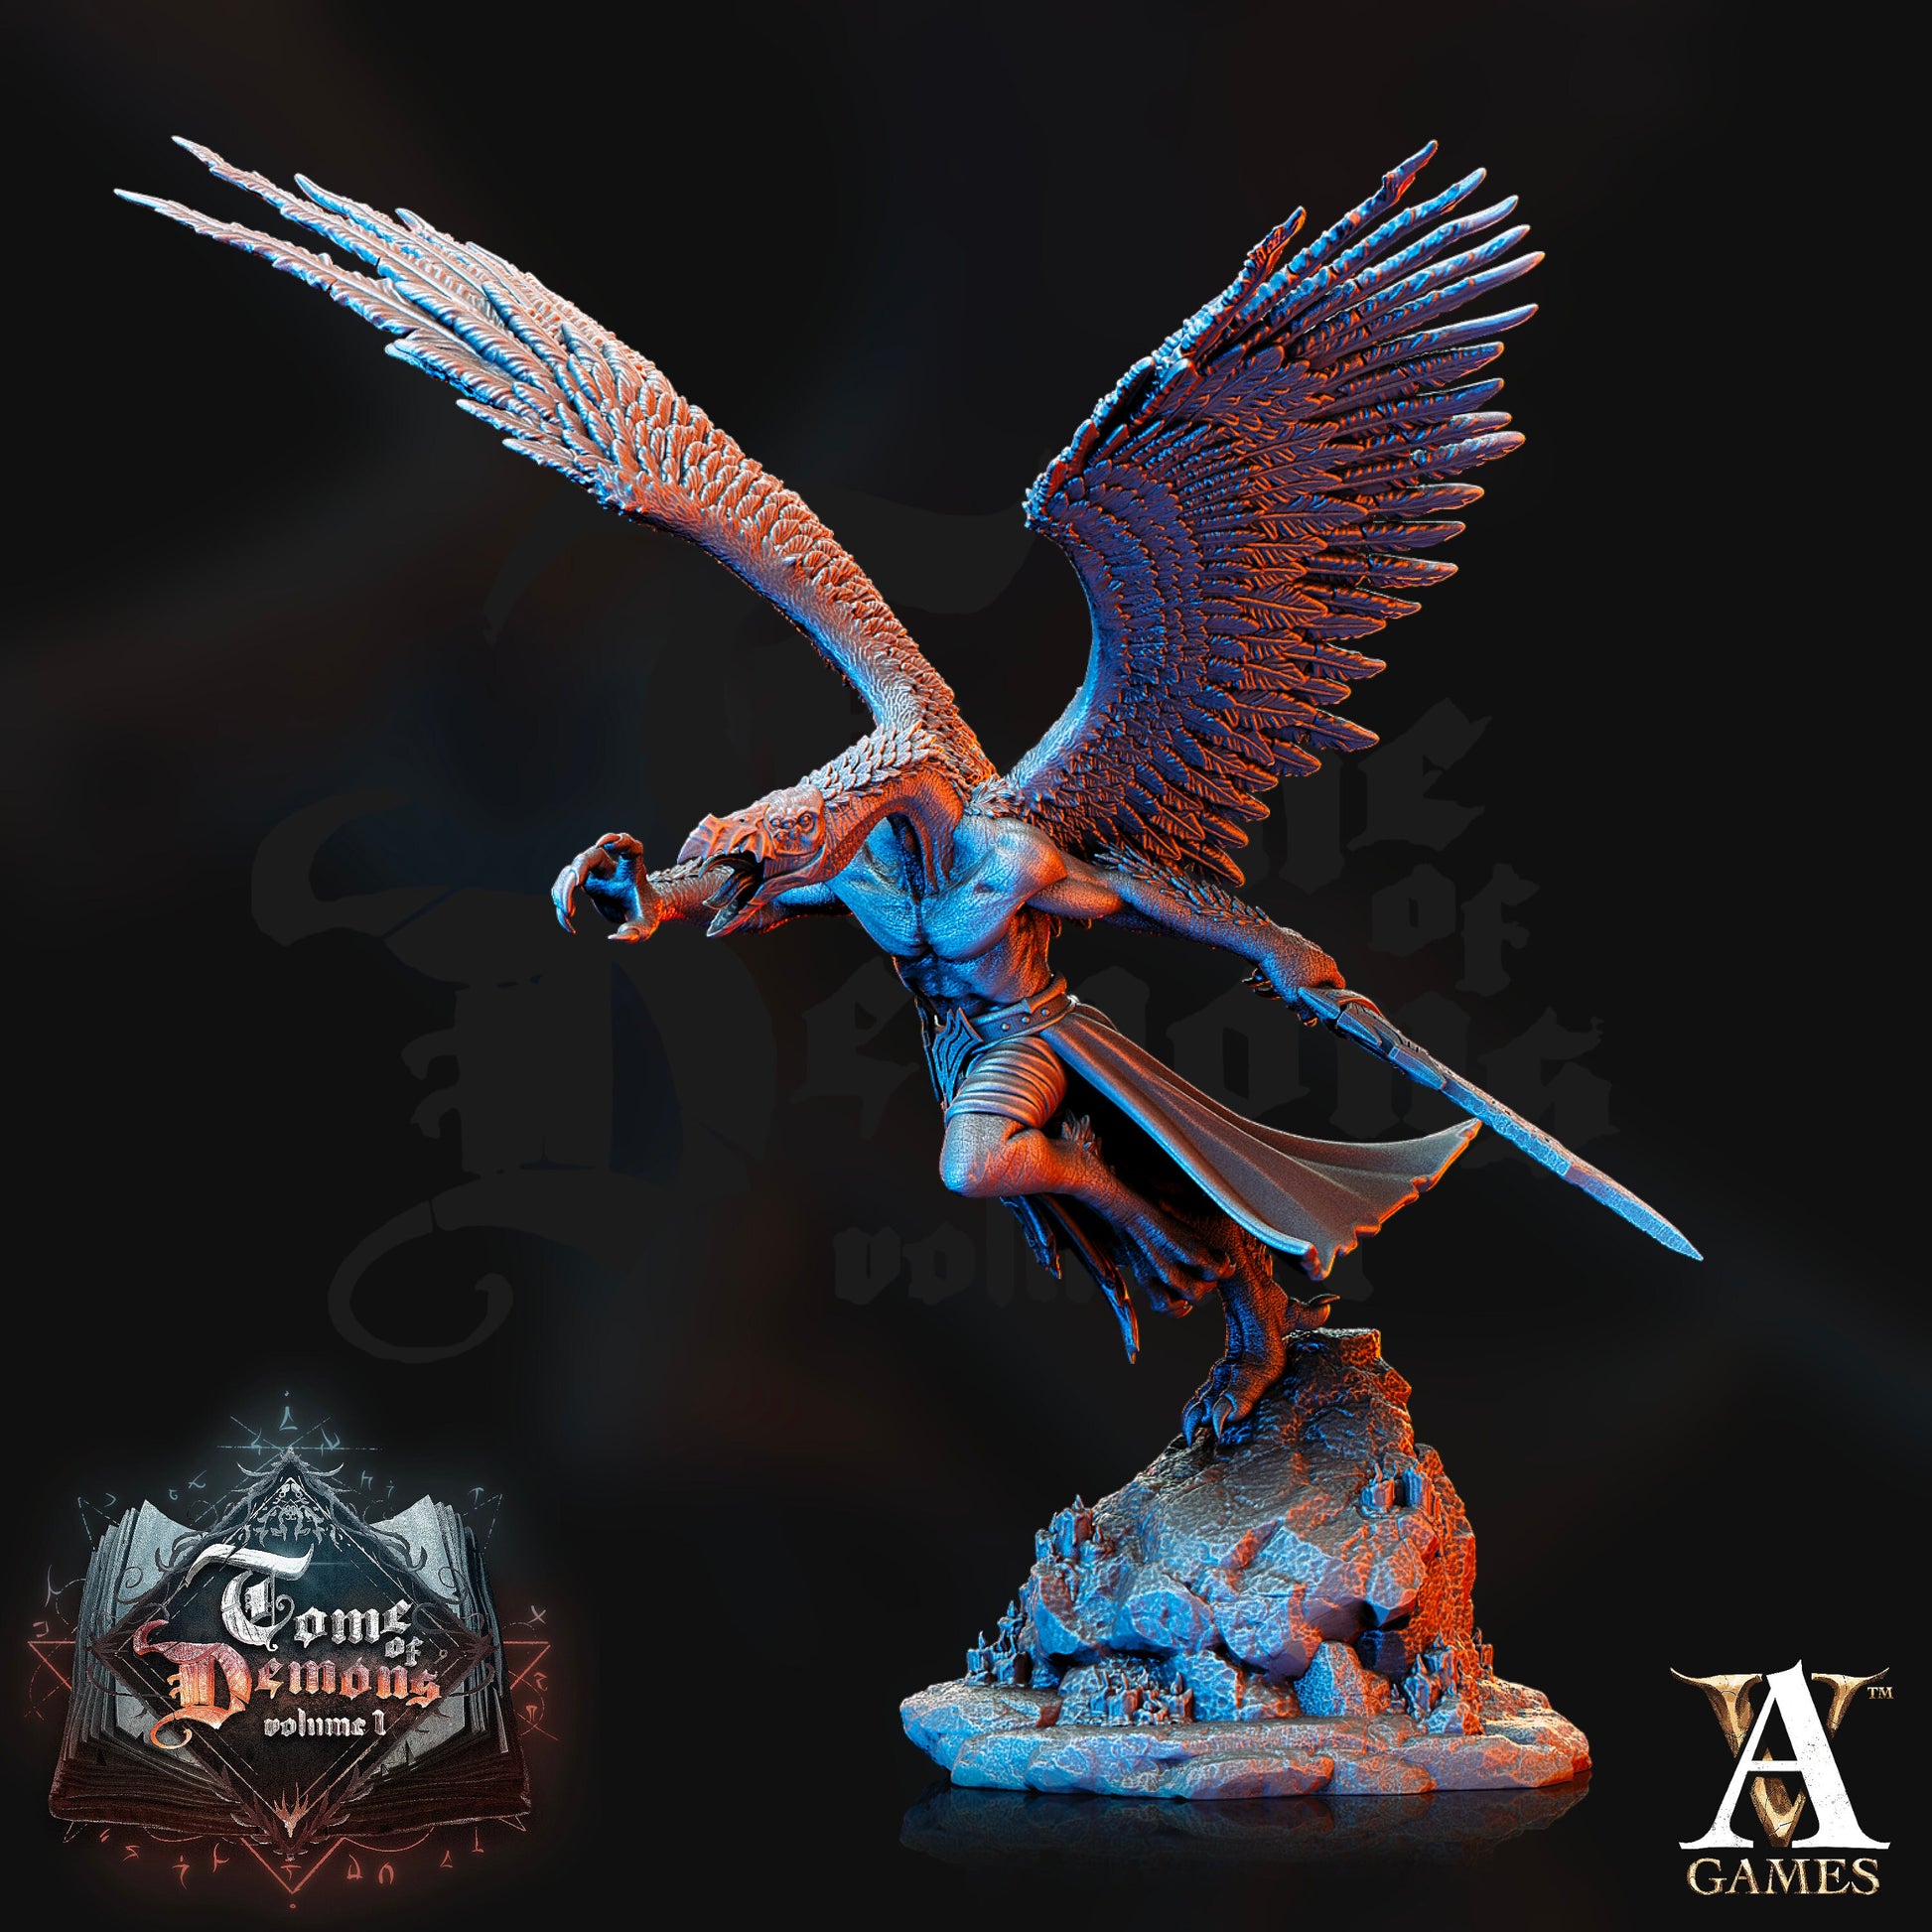 Vulduk, Vulture Demon - Archvillain Games Printed Miniature | Dungeons & Dragons | Pathfinder | Tabletop